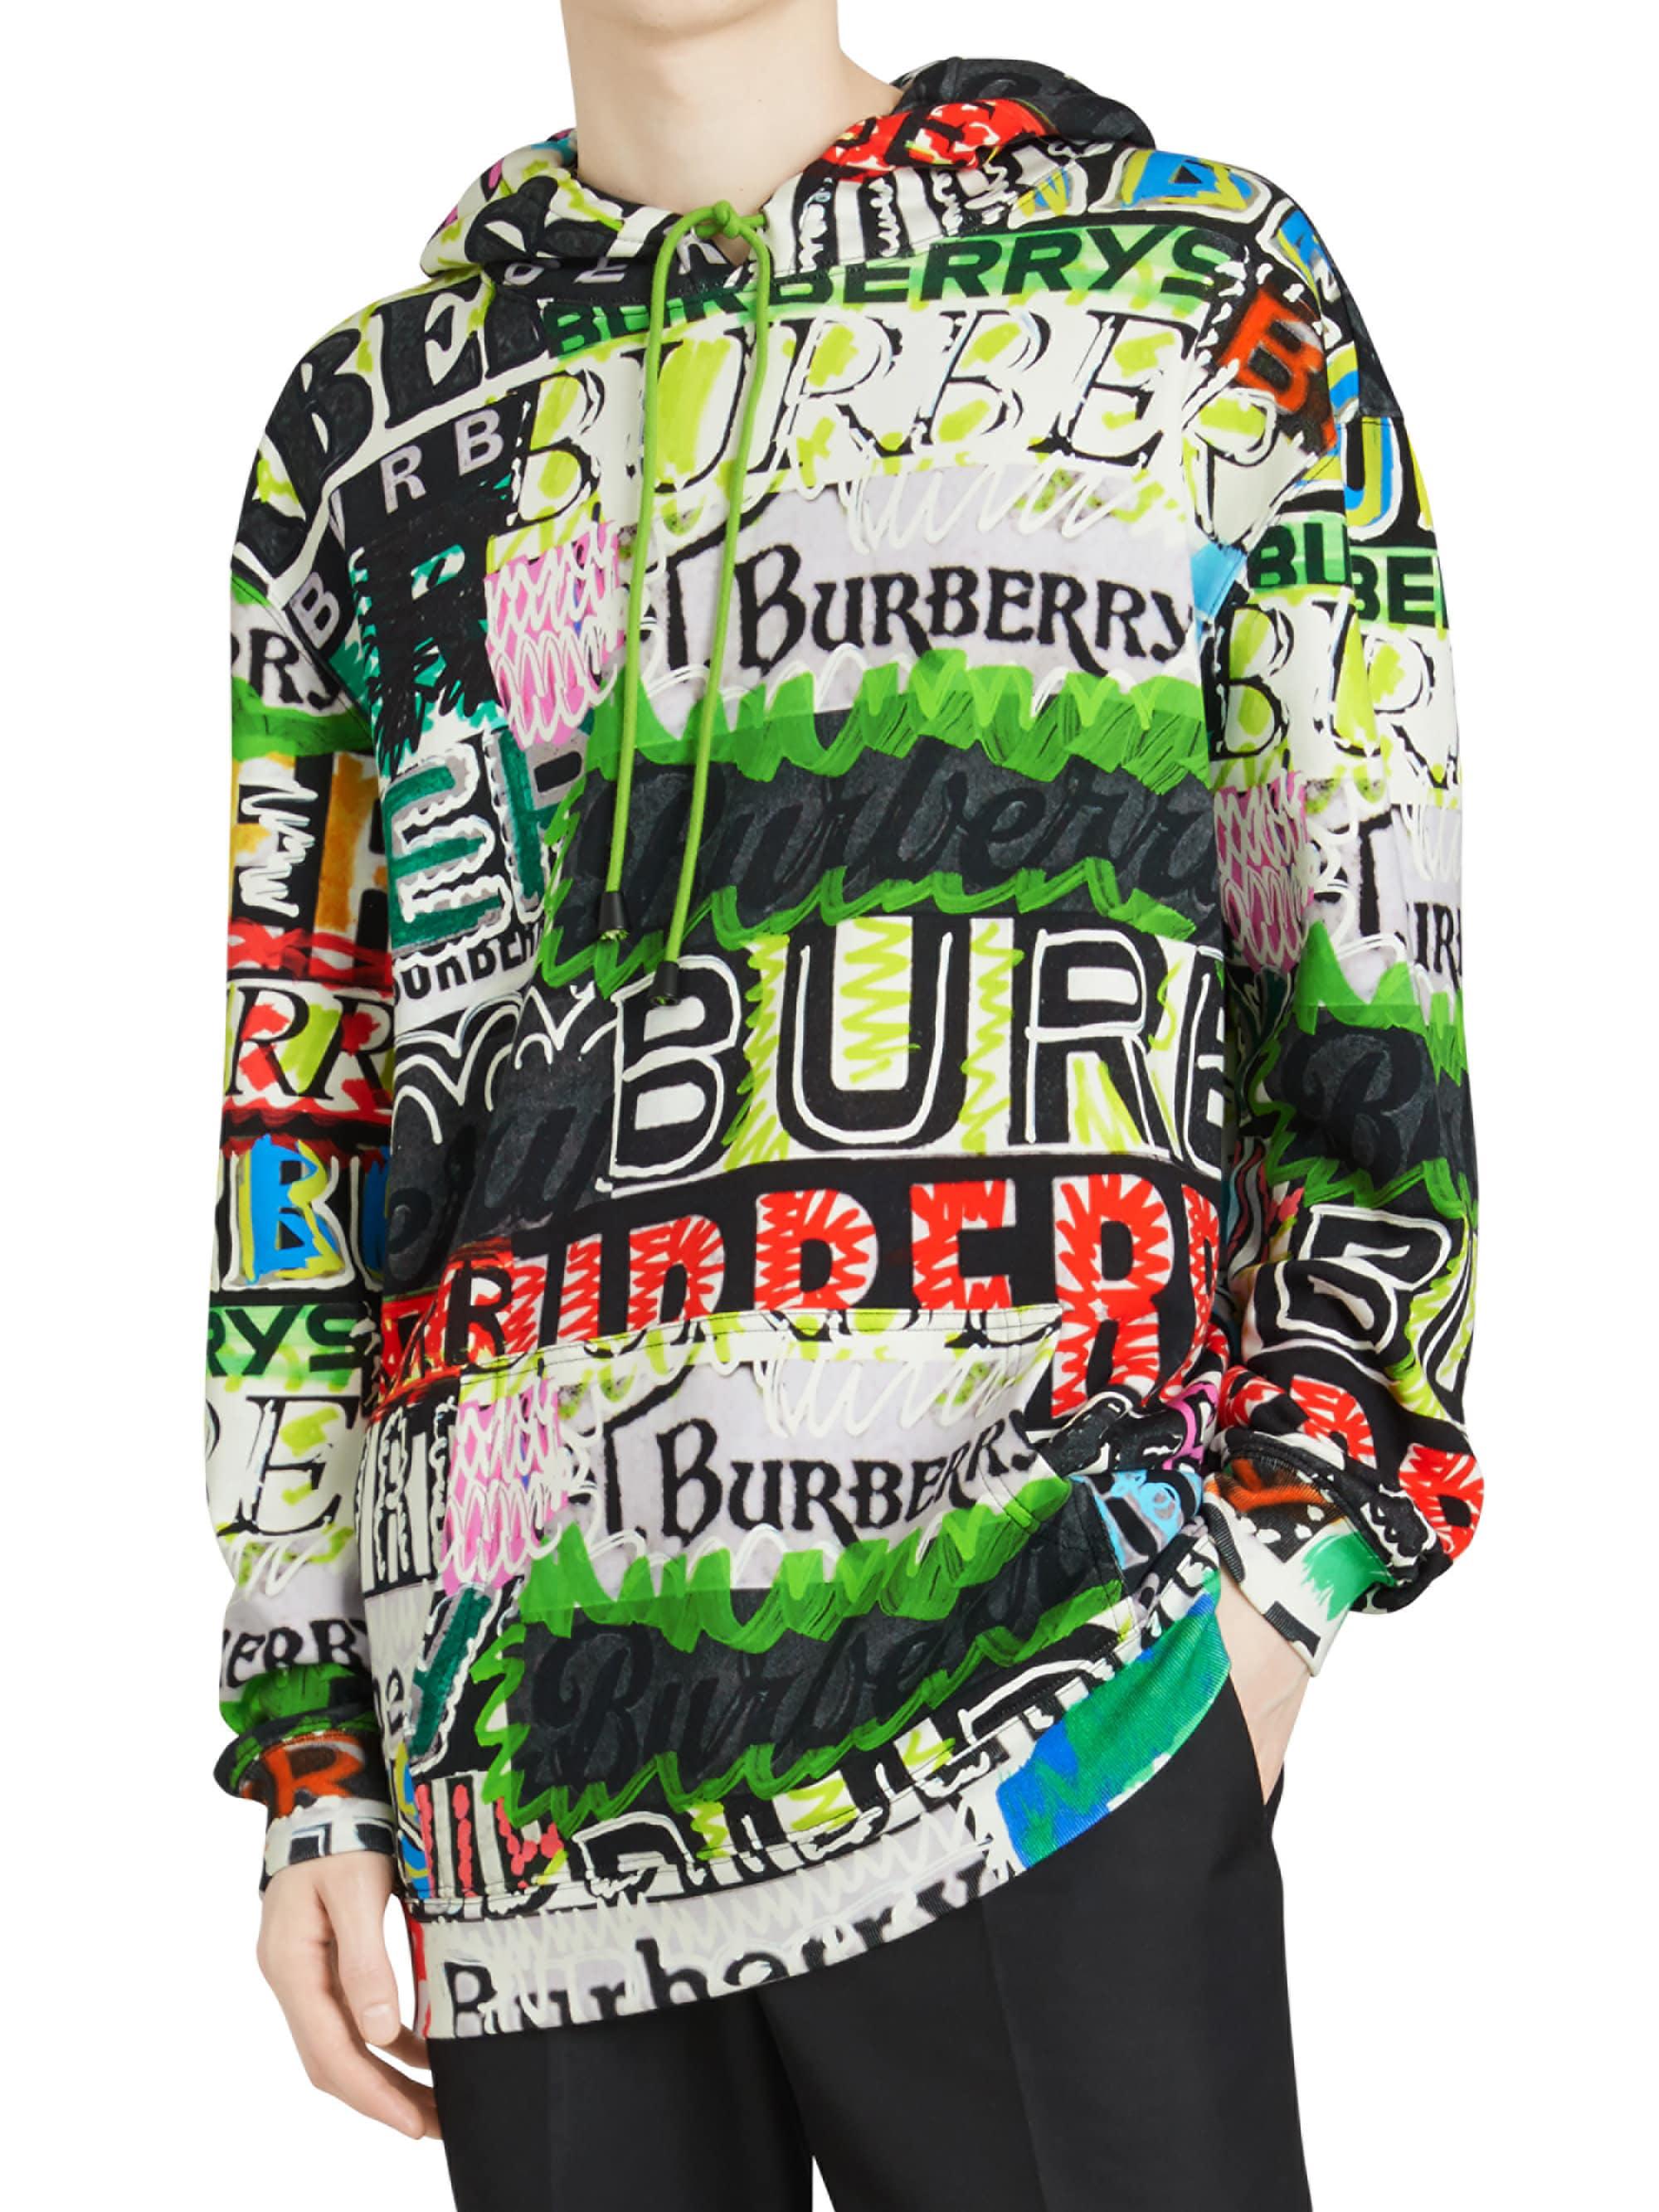 increase apology Made of Burberry Graffiti Sweatshirt Discount, 51% OFF | www.colegiogamarra.com